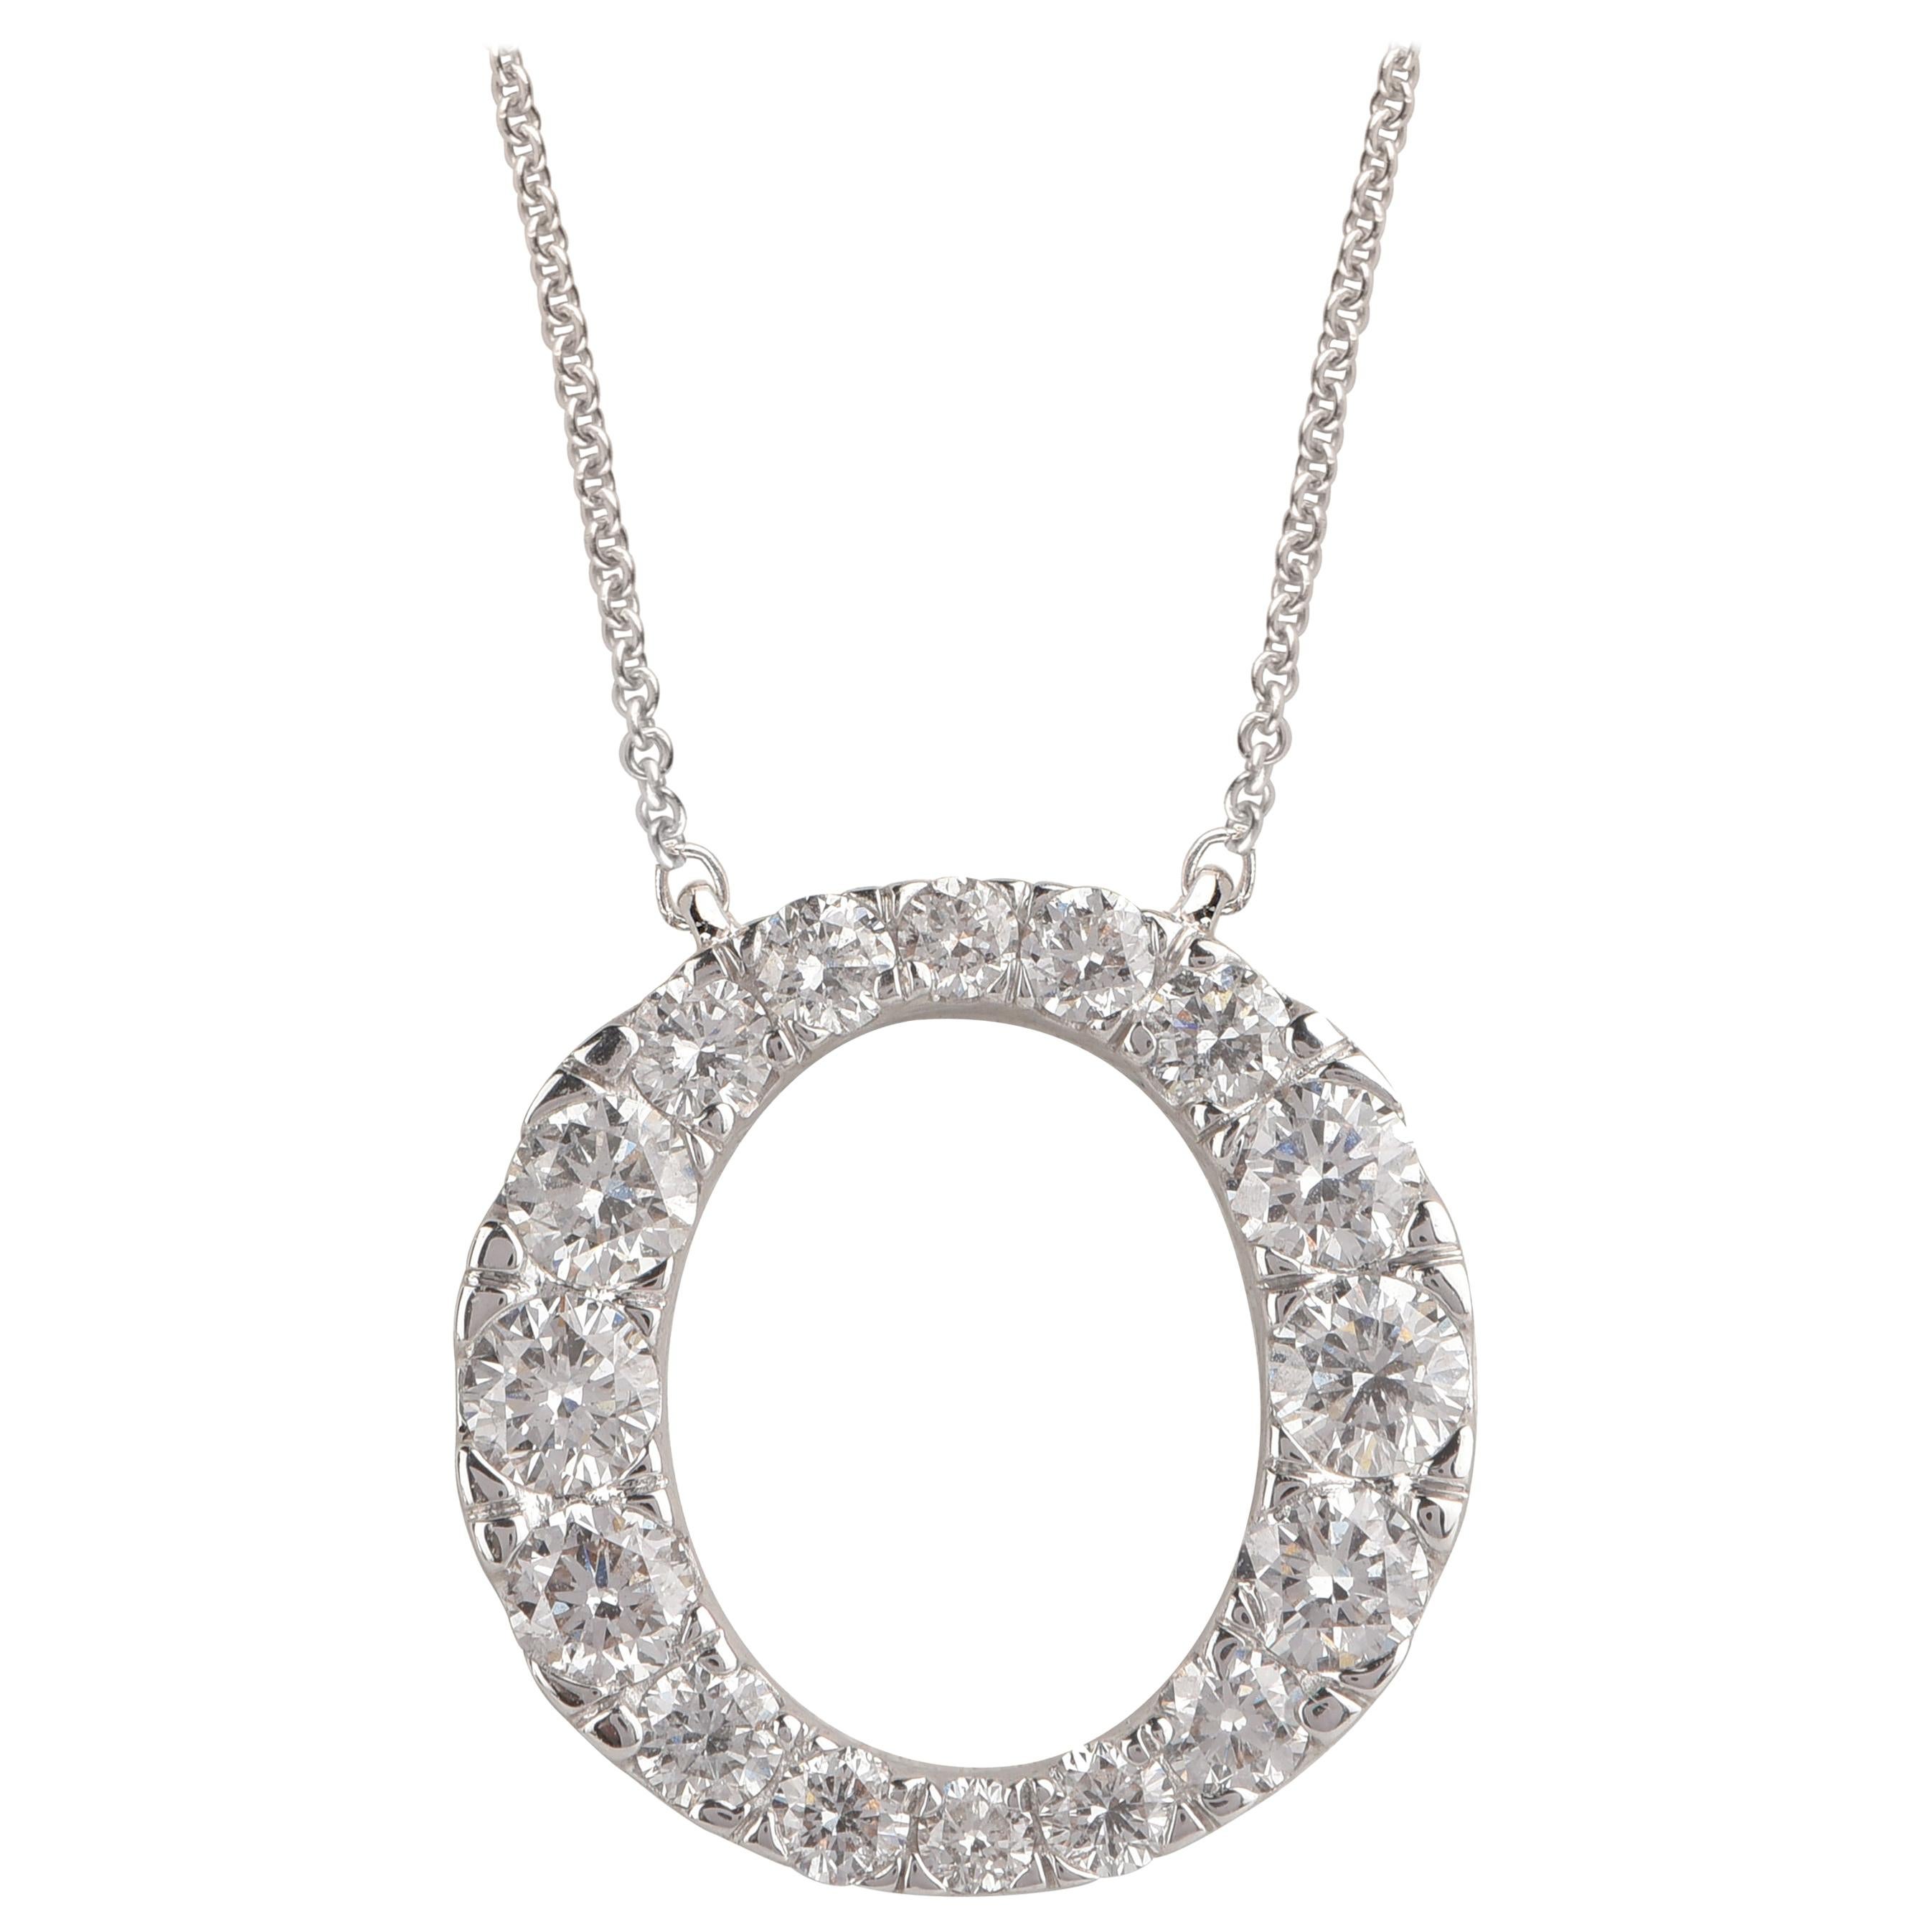 TJD 1.00 Carat Diamond 14 Karat White Gold  "O" Shape Pendant with 18 inch chain